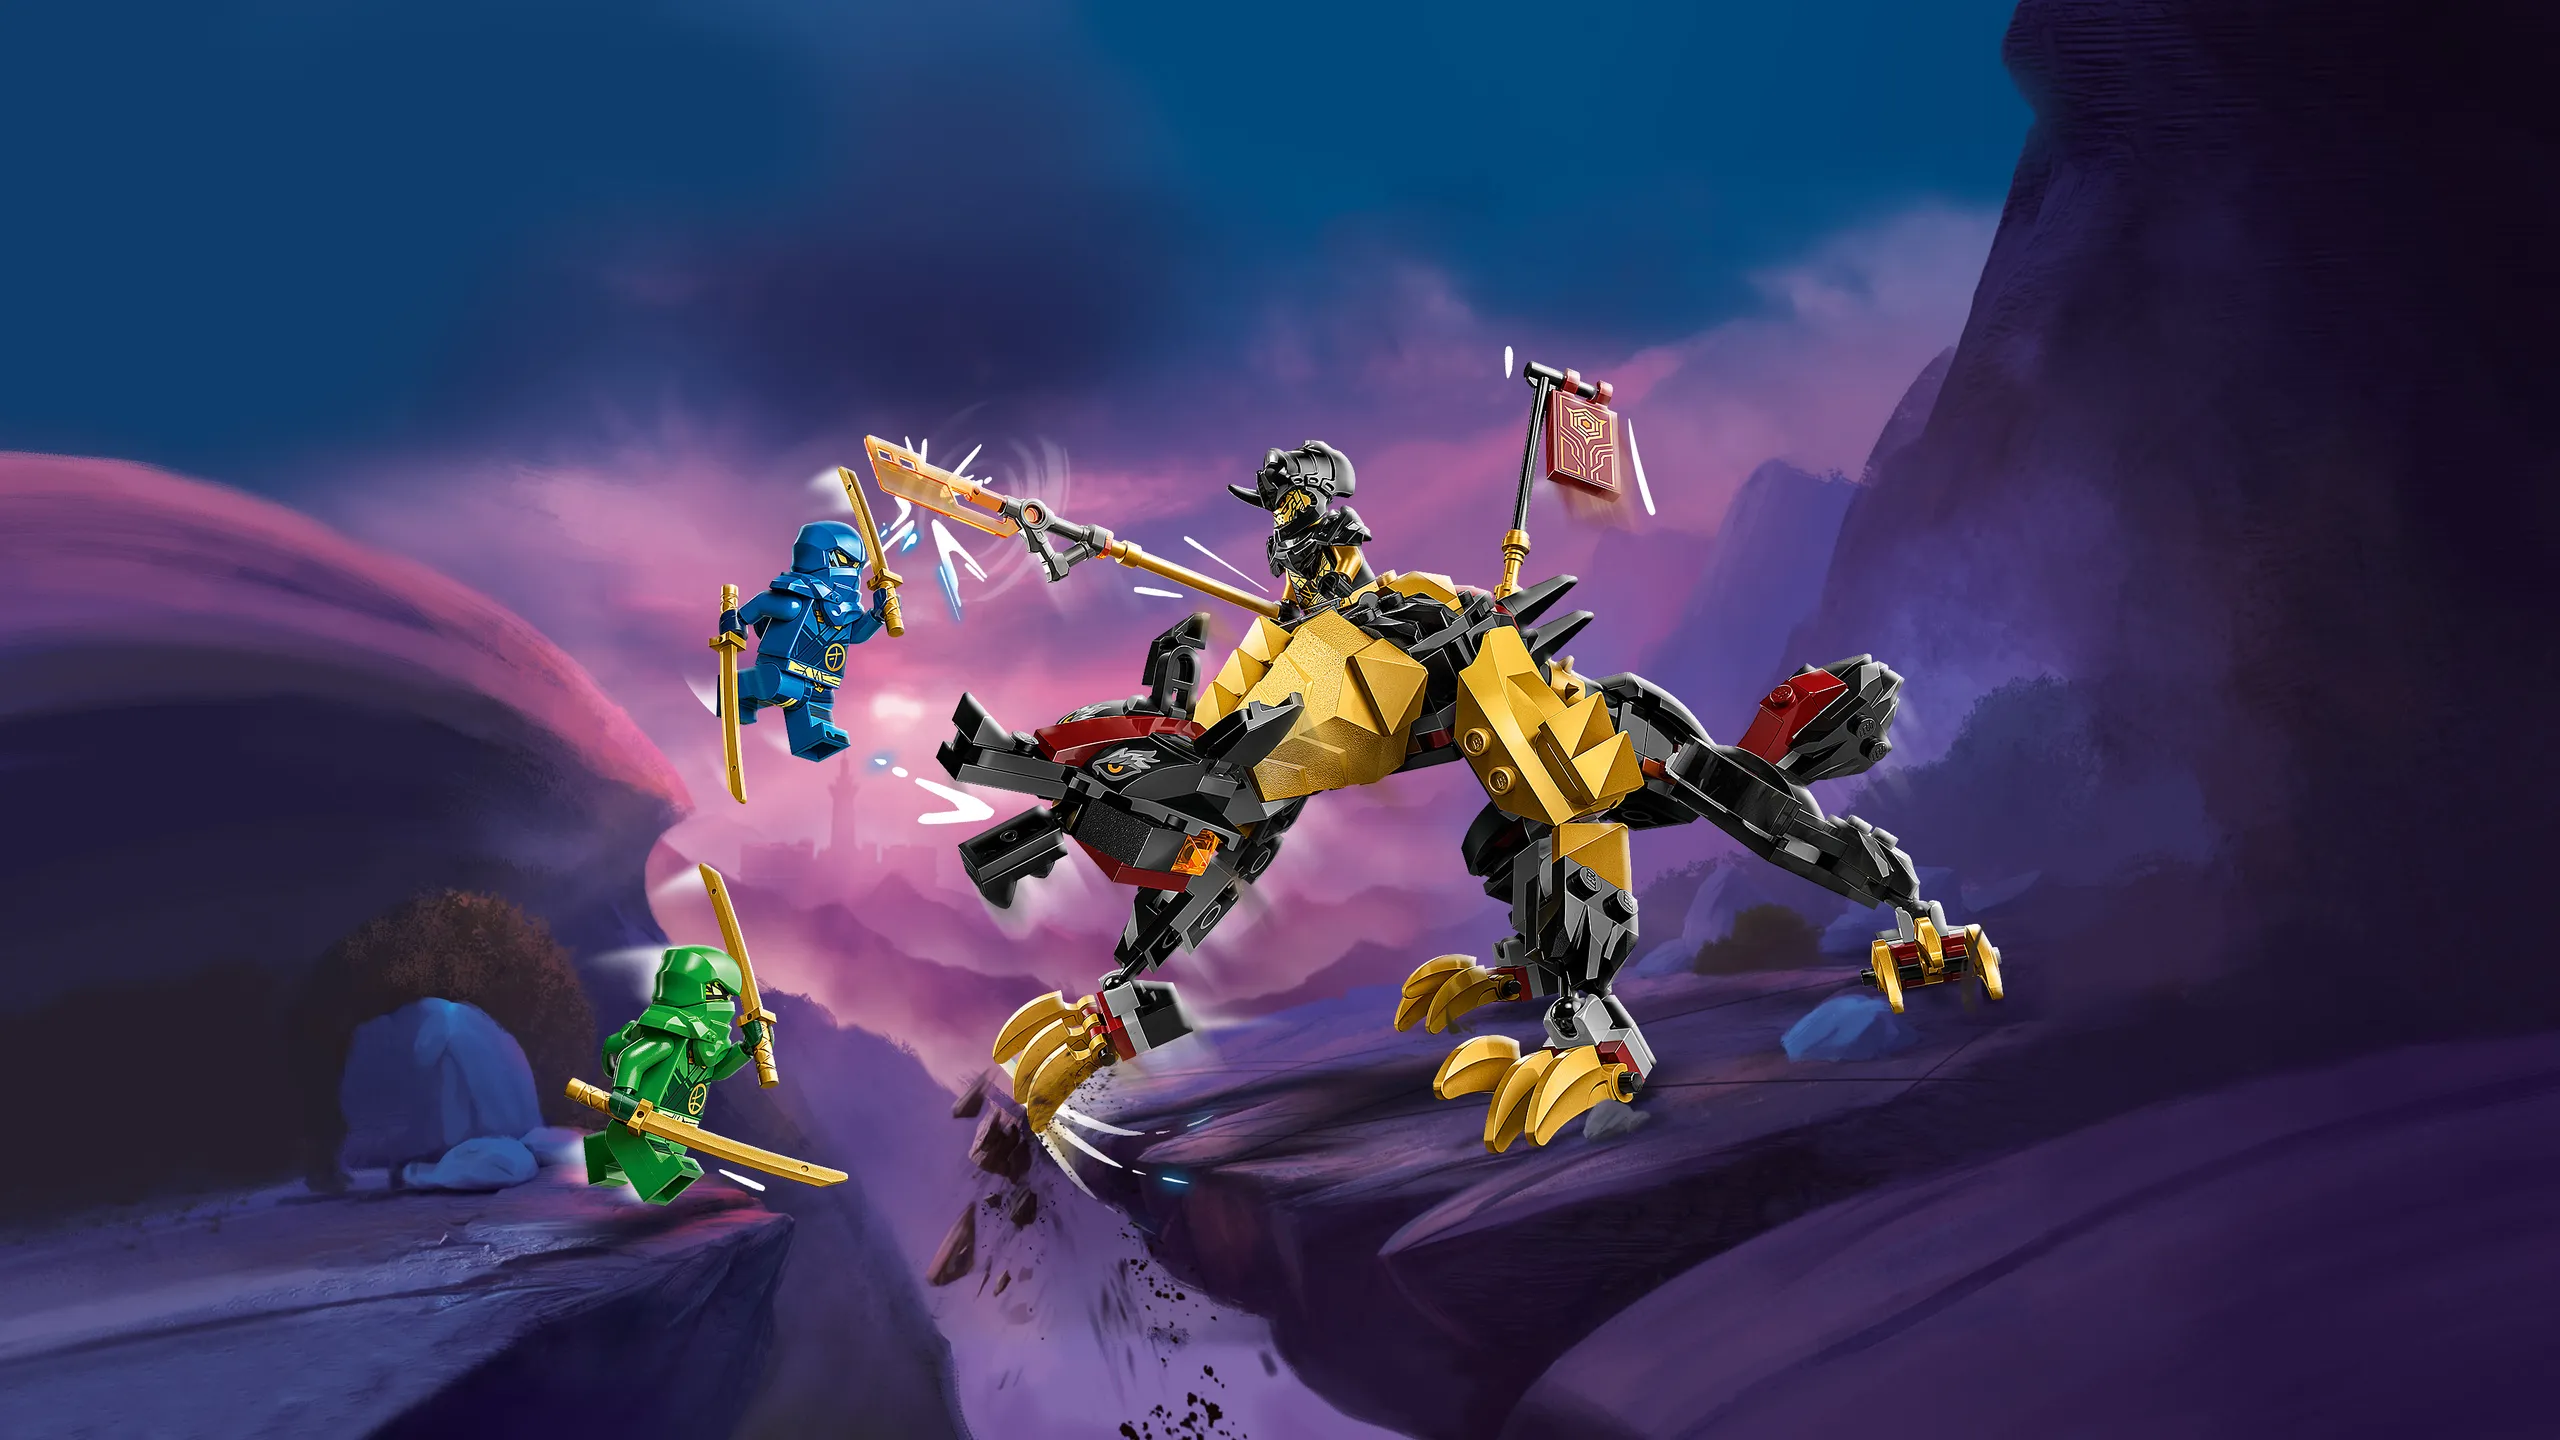 Réveil LEGO® NINJAGO™ Pirates du ciel avec figurine de Lloyd 5005118 |  NINJAGO® | Boutique LEGO® officielle CA